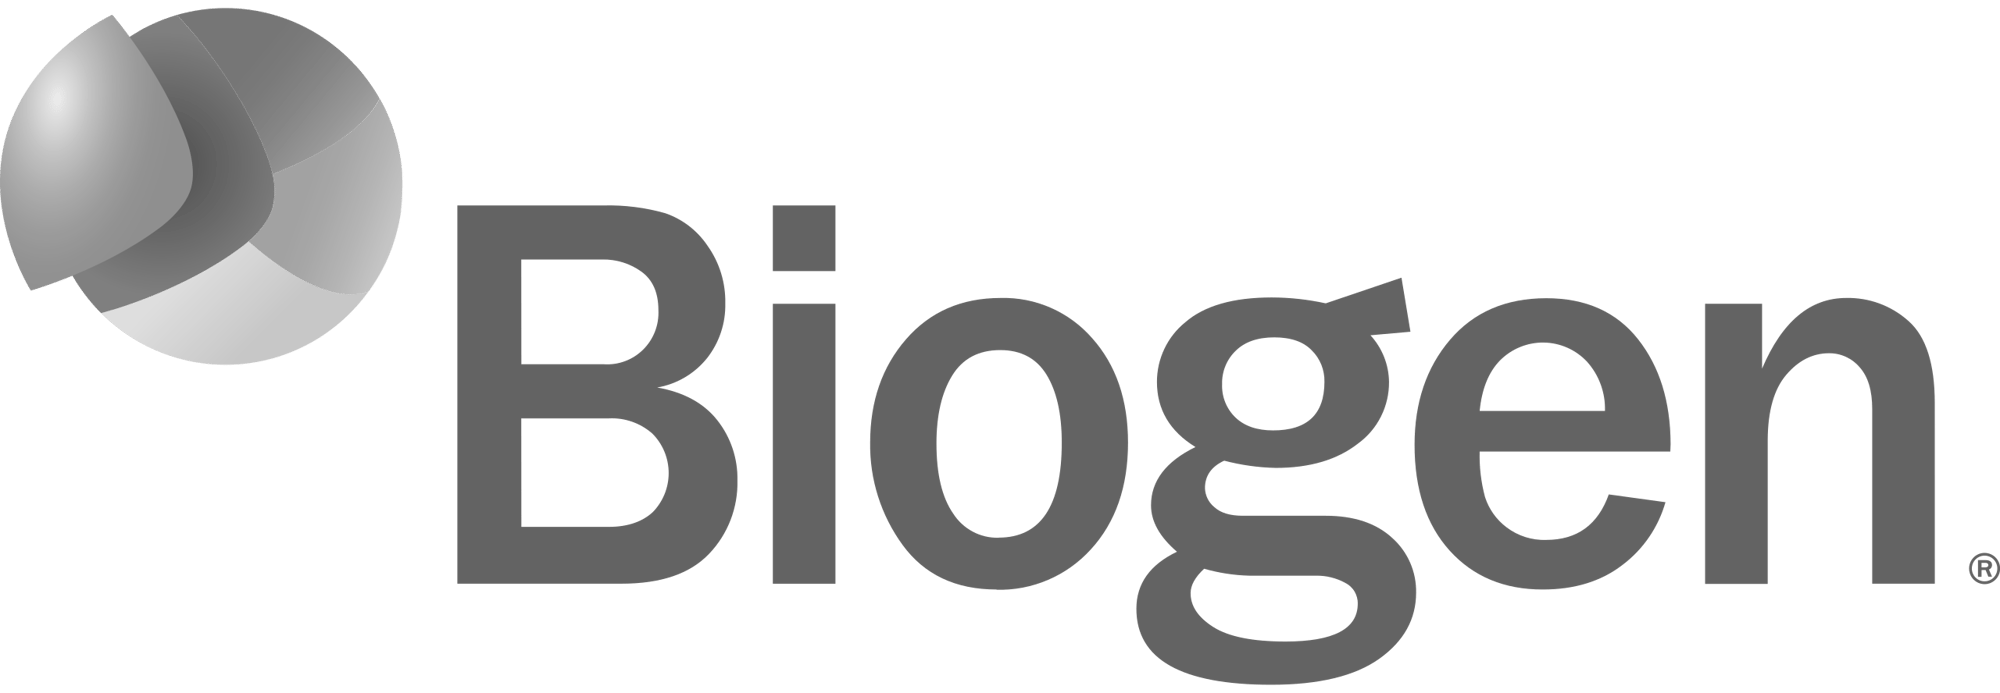 Biogen_logo.svg